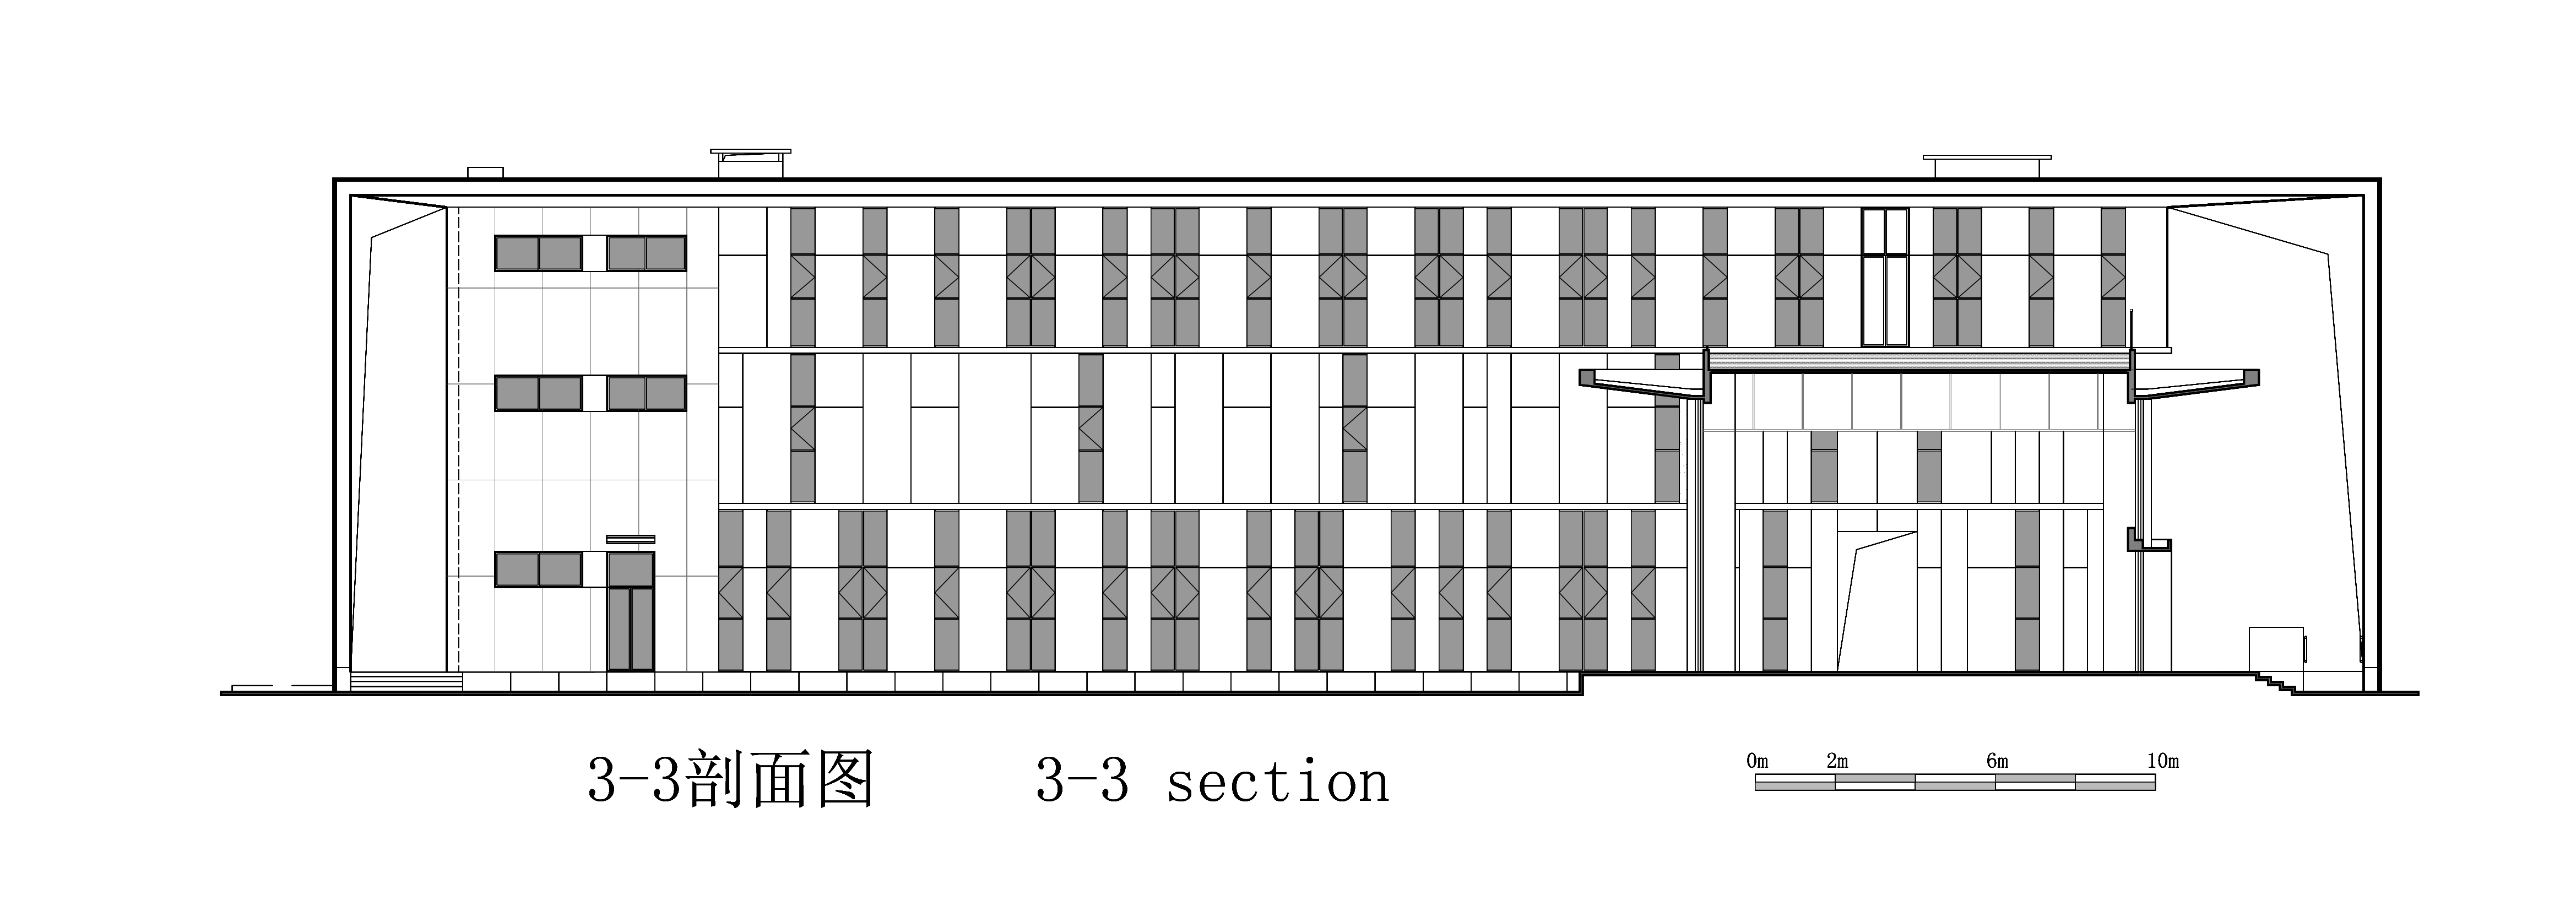 m93、3-3剖面图.jpg